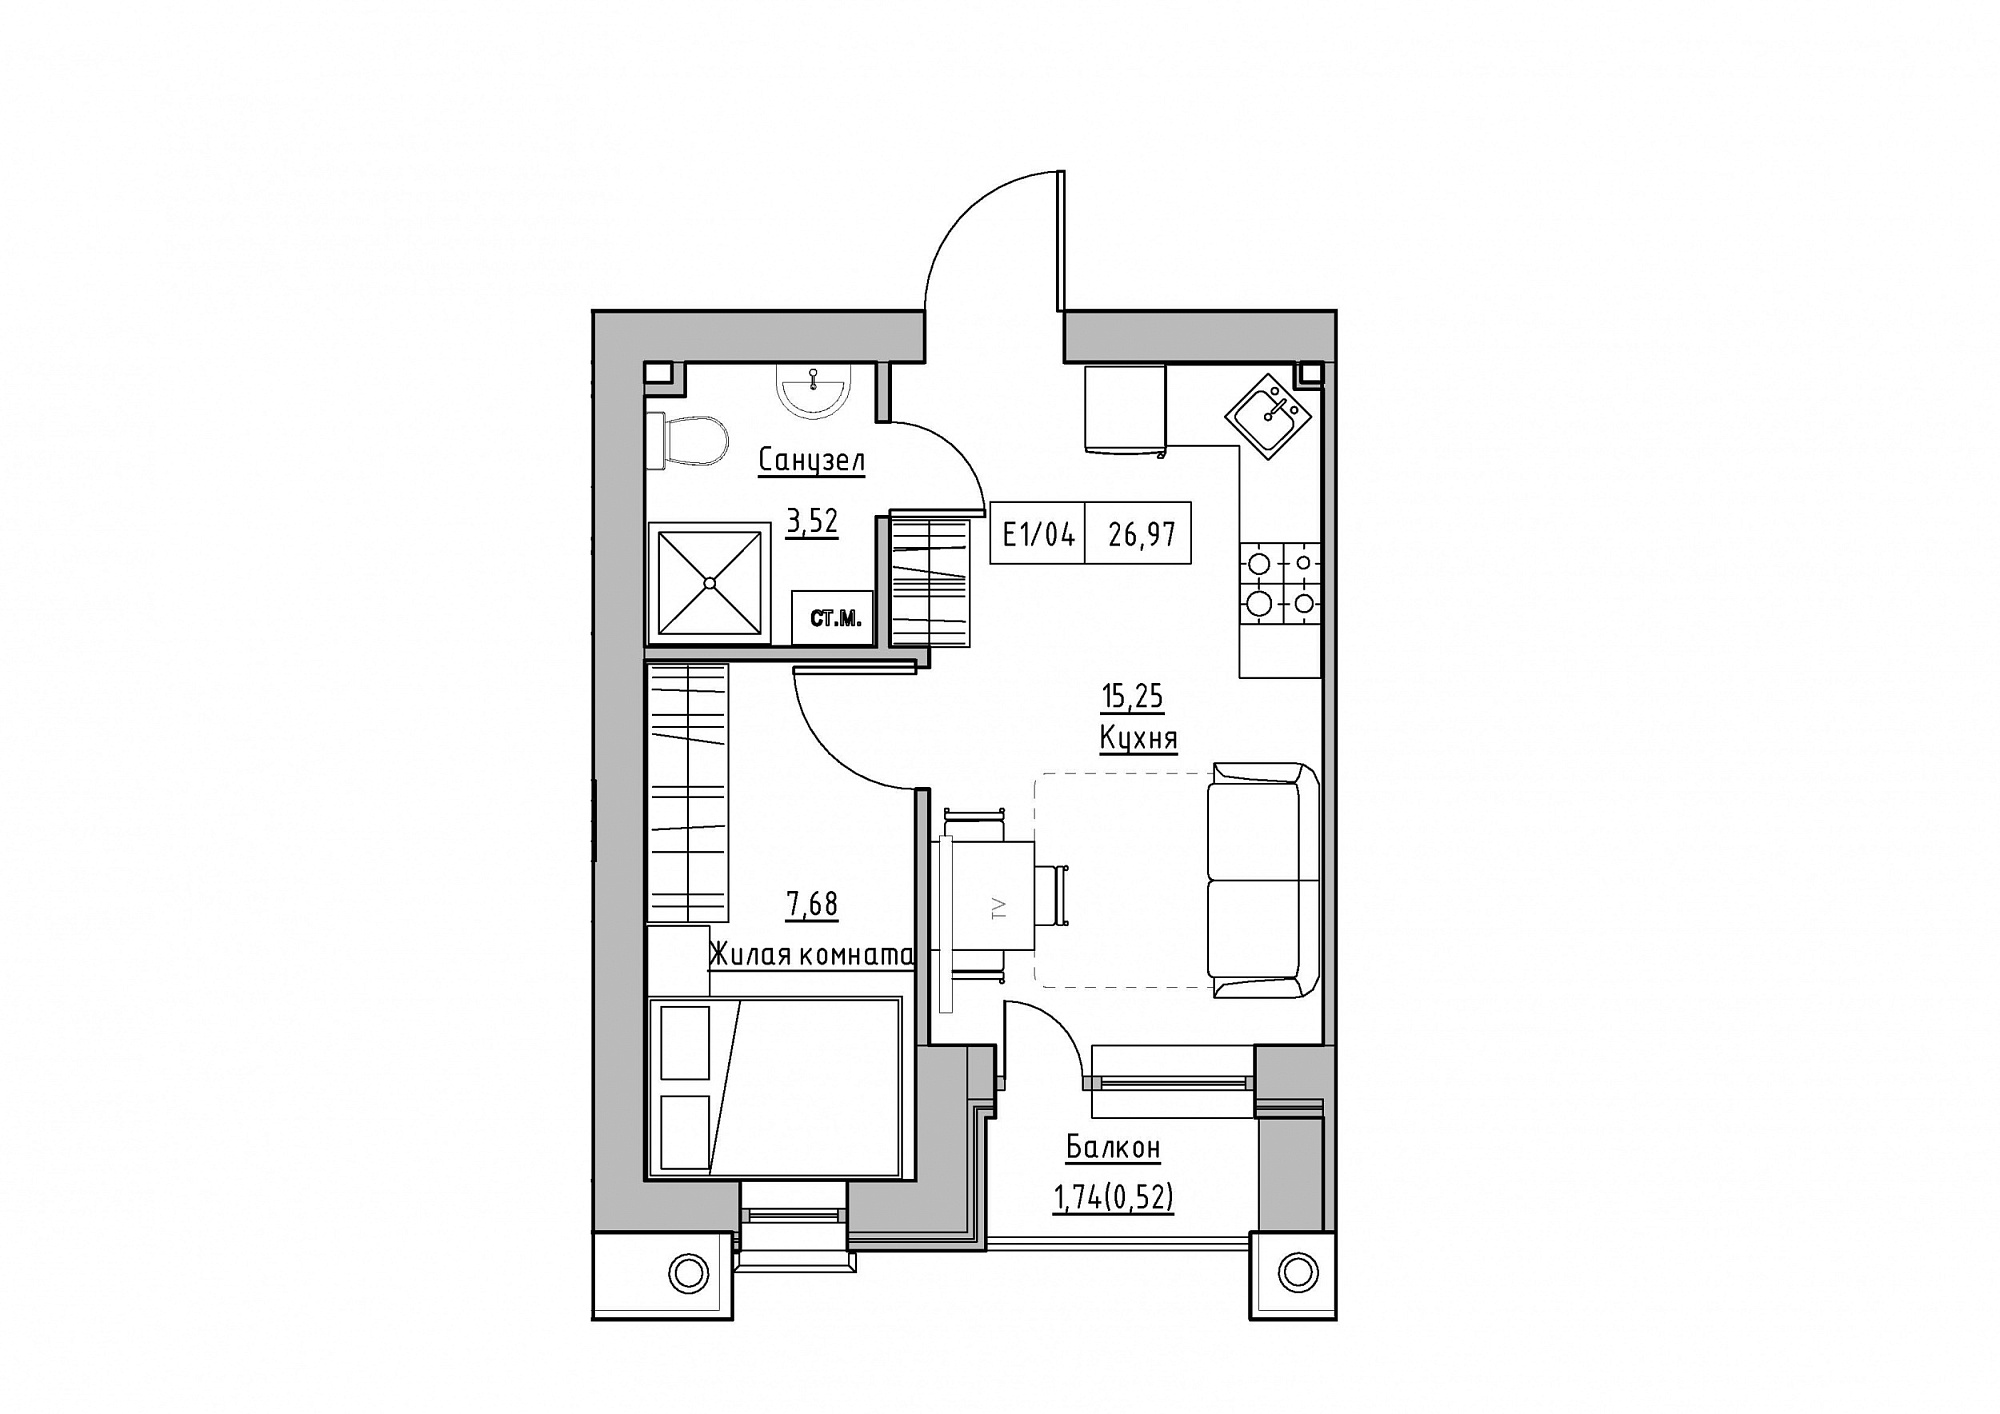 Planning 1-rm flats area 26.97m2, KS-012-05/0008.